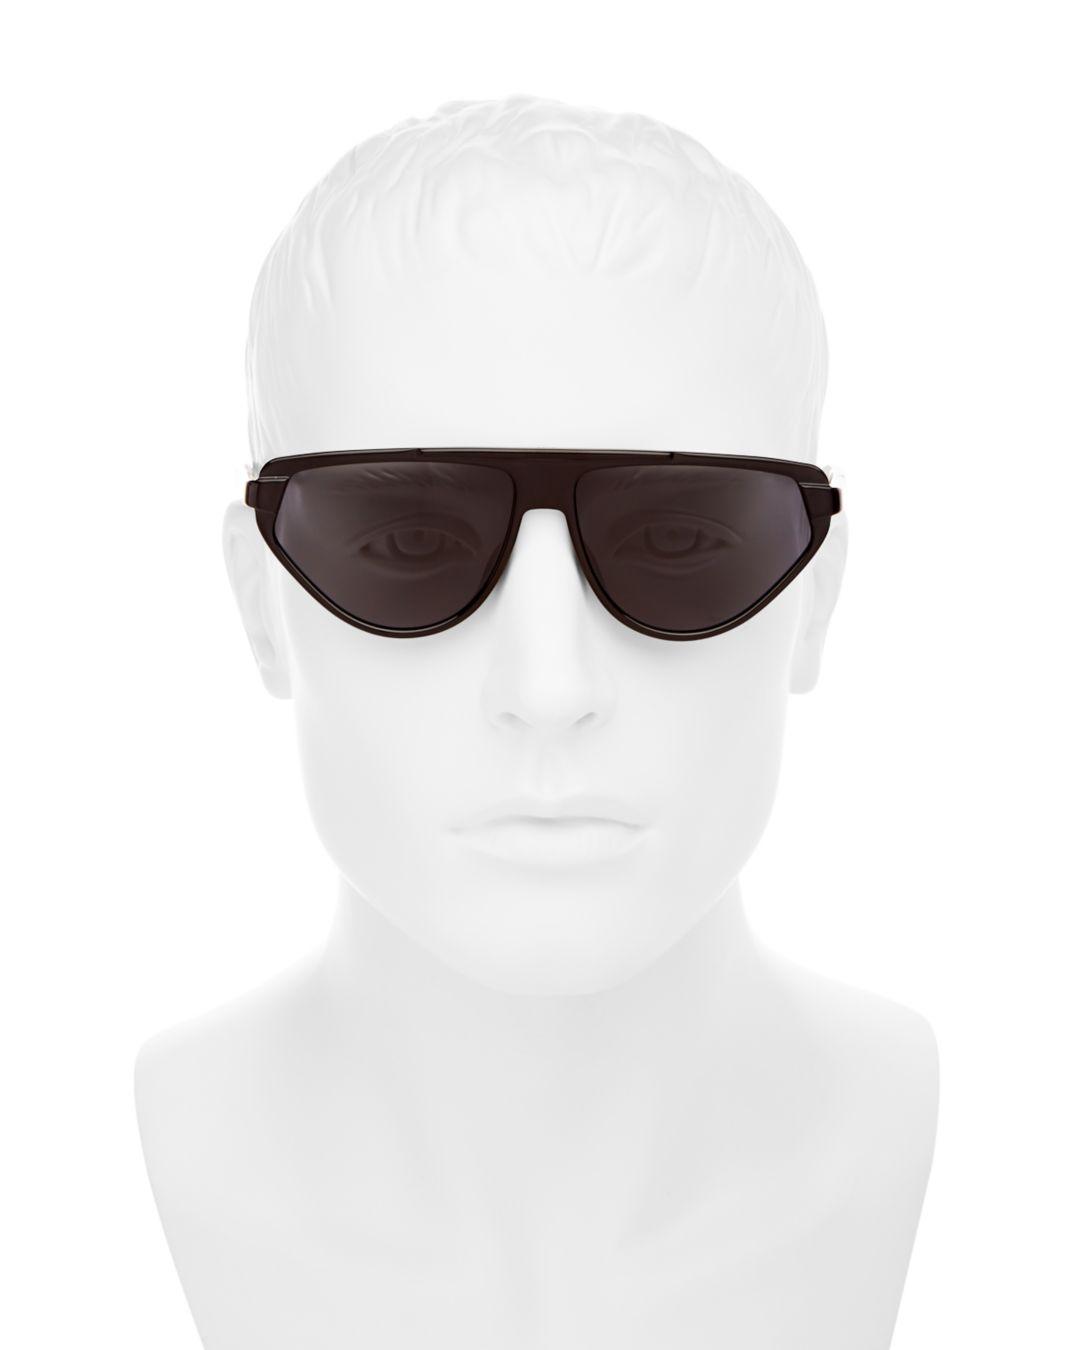 MENS DIOR HOMME SUNGLASSES  Dior homme Dior homme sunglasses Sunglasses